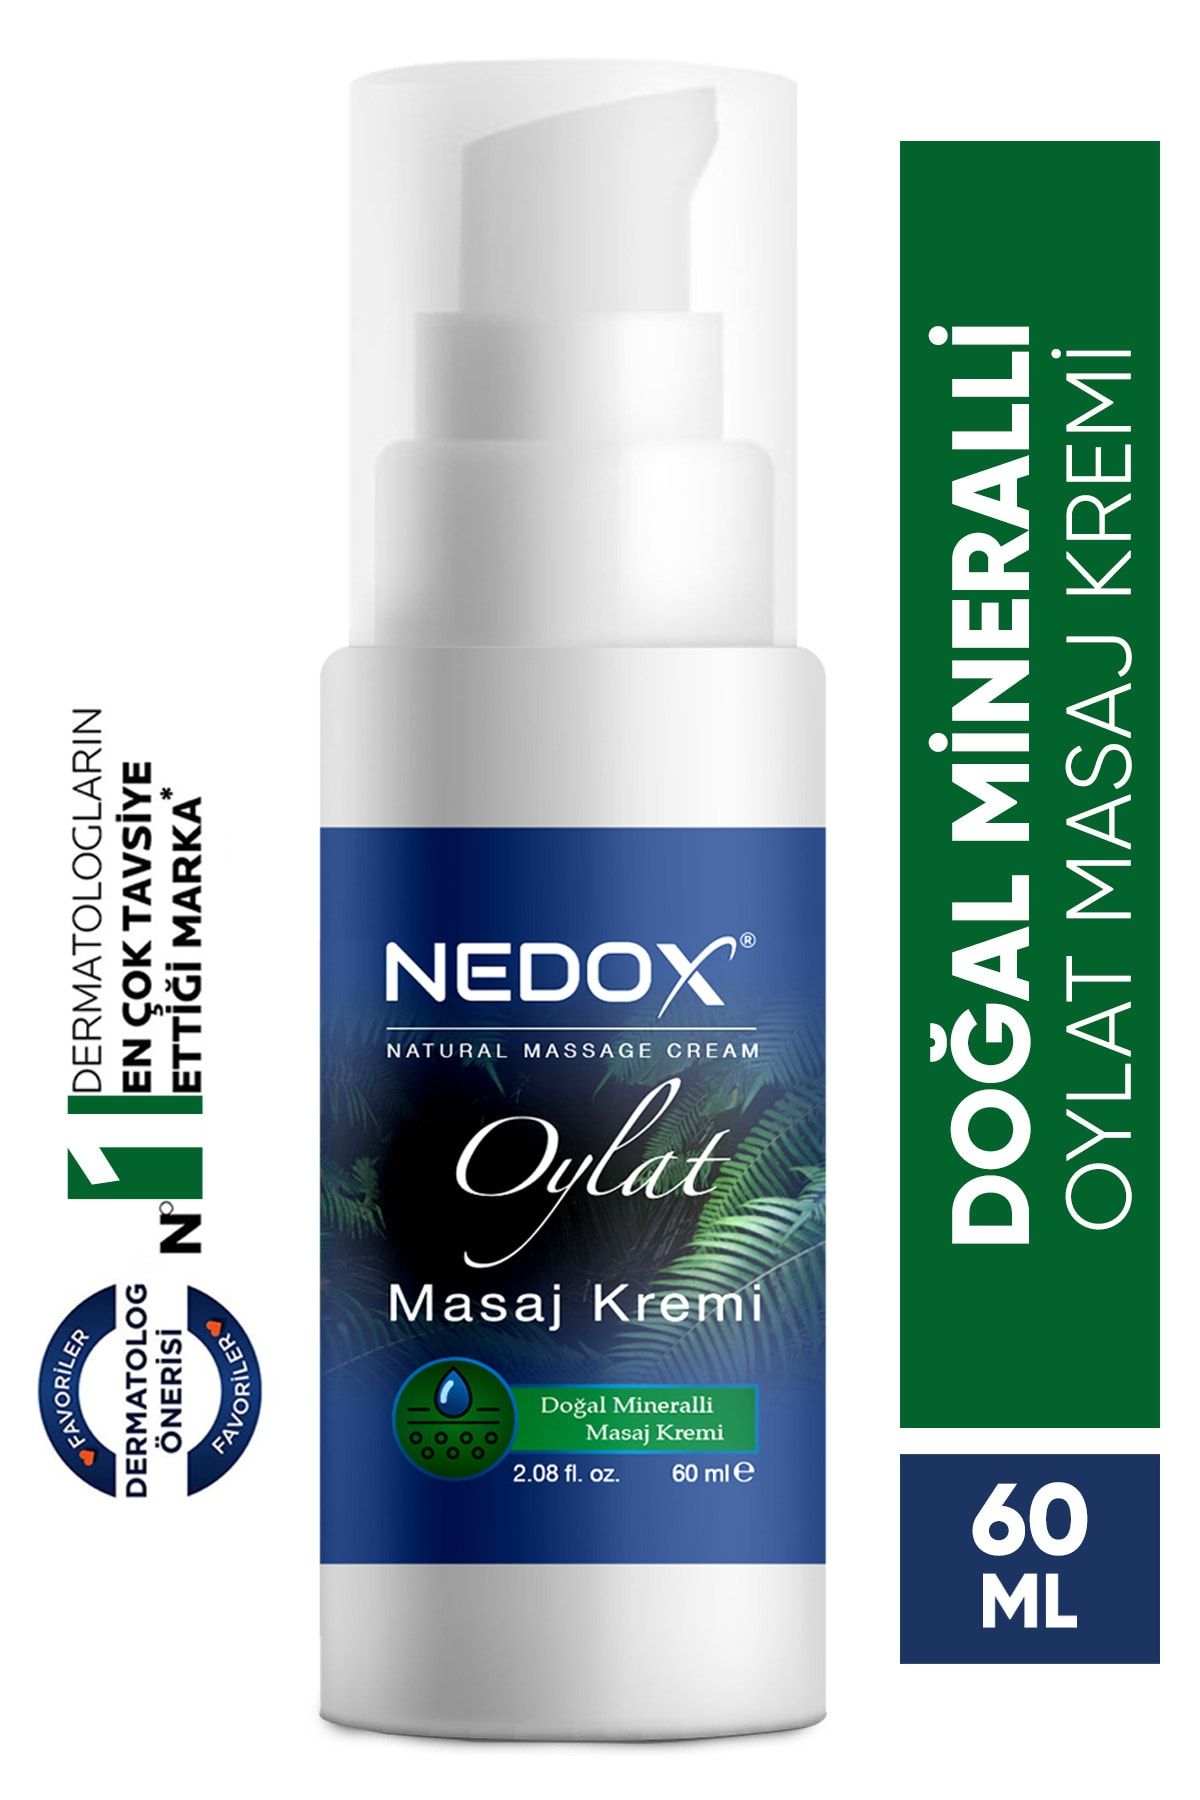 NEDOX Doğal Mineralli Ağrı Kesici Oylat Masaj Kremi 60 Ml